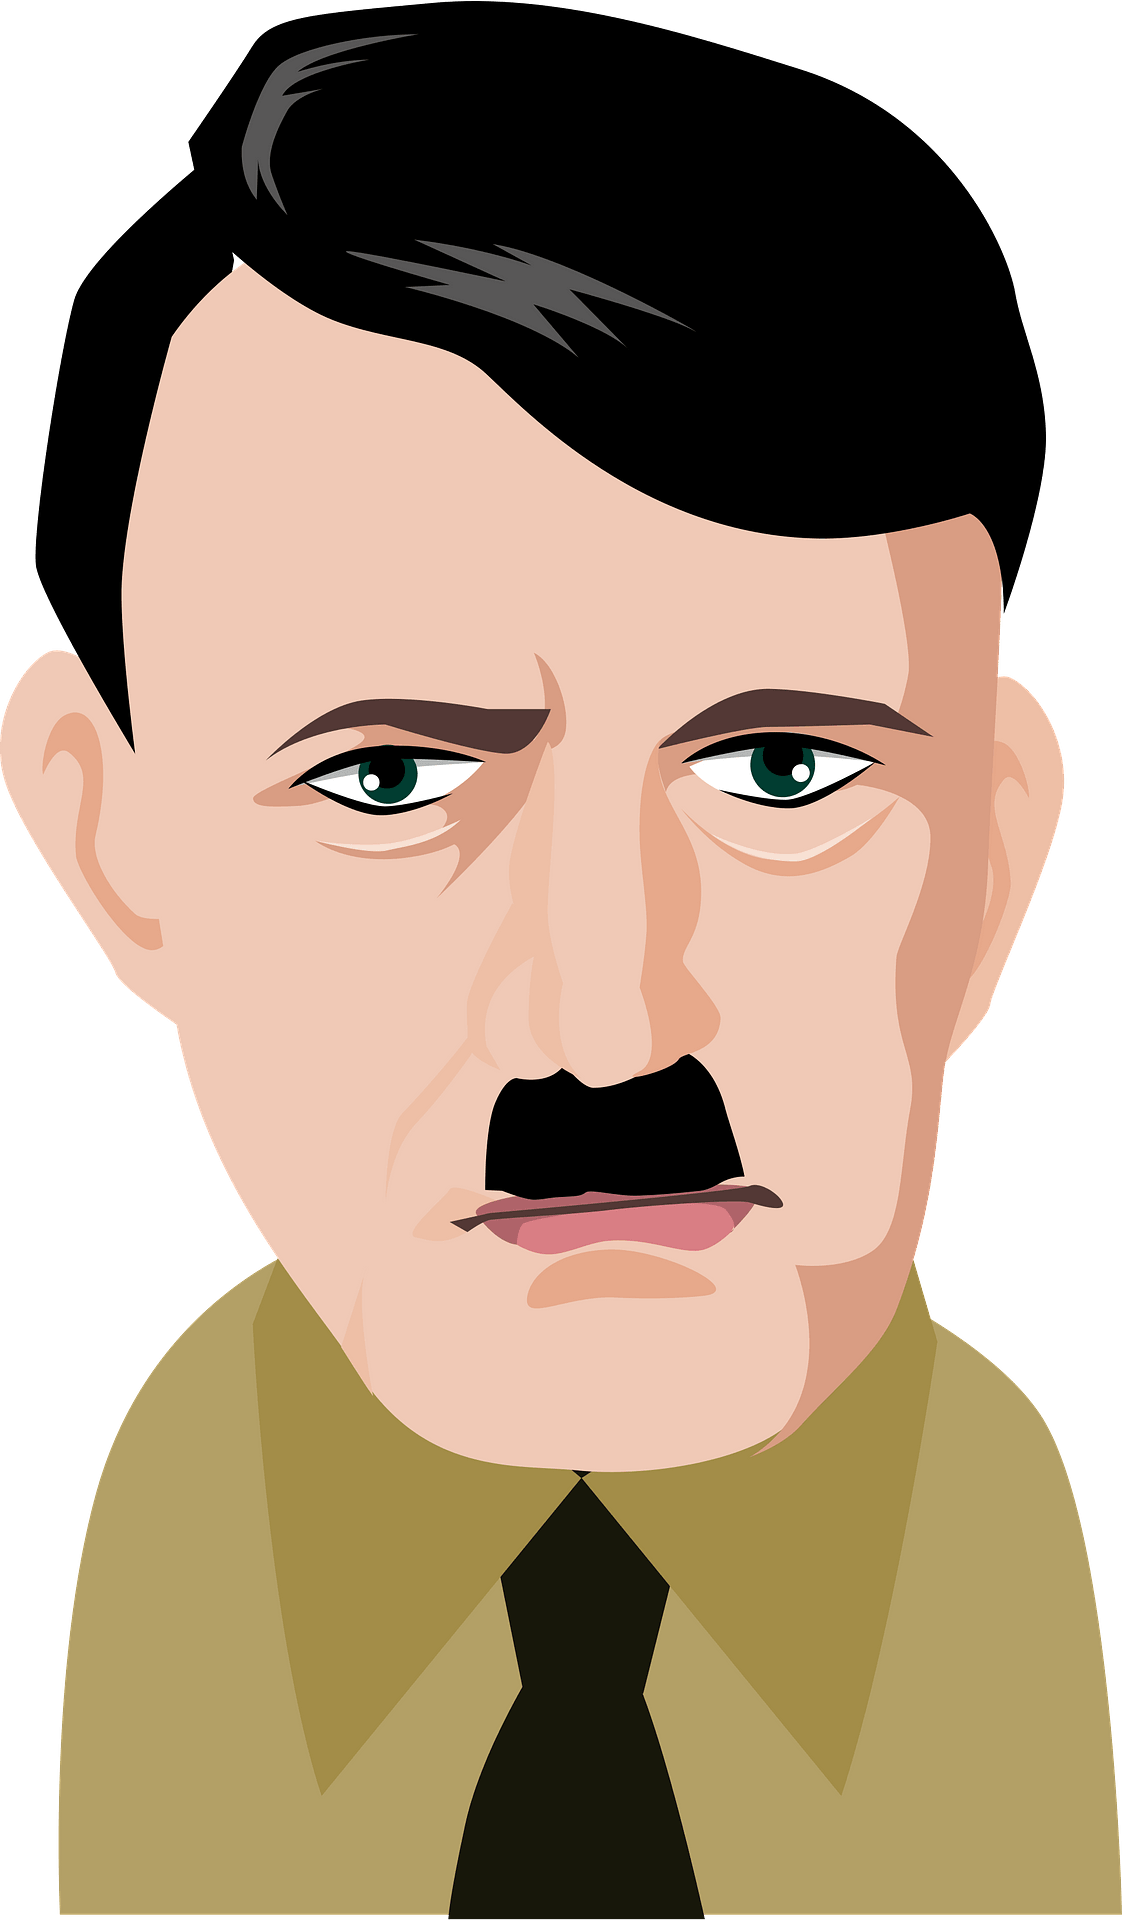 Mustache Hitler Free Download Image PNG Image